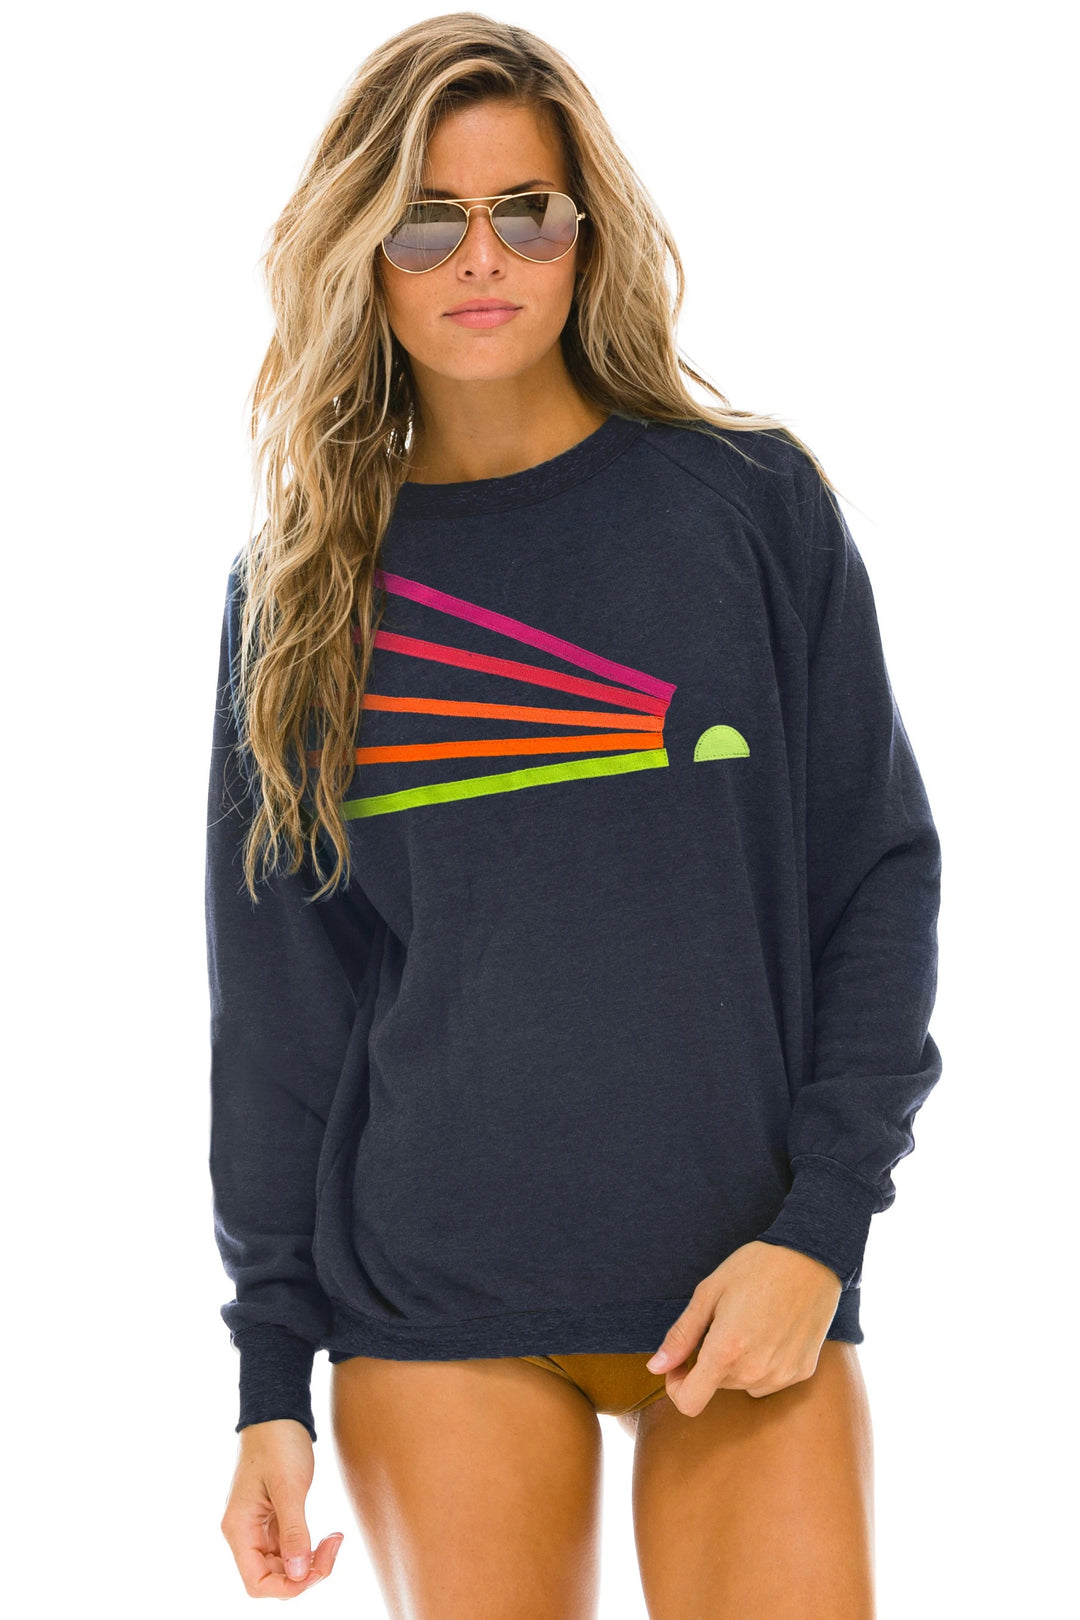 Aviator Nation - Daydream Crew Sweatshirt in Heather Navy/Neon